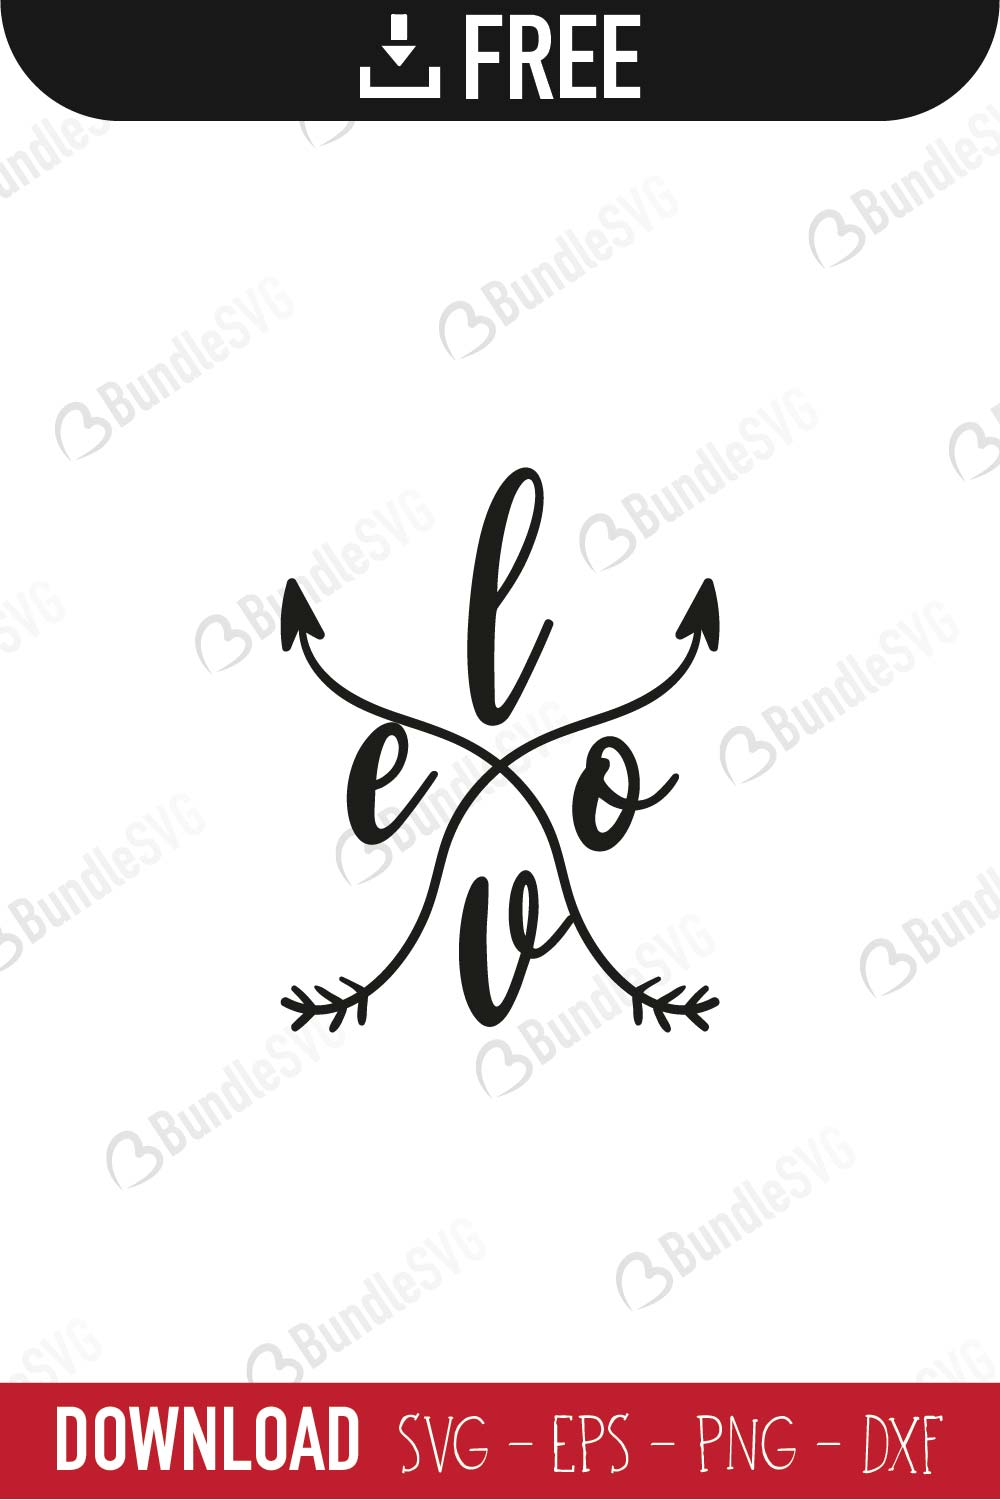 Love Monogram Arrow SVG Free Download | BundleSVG.com